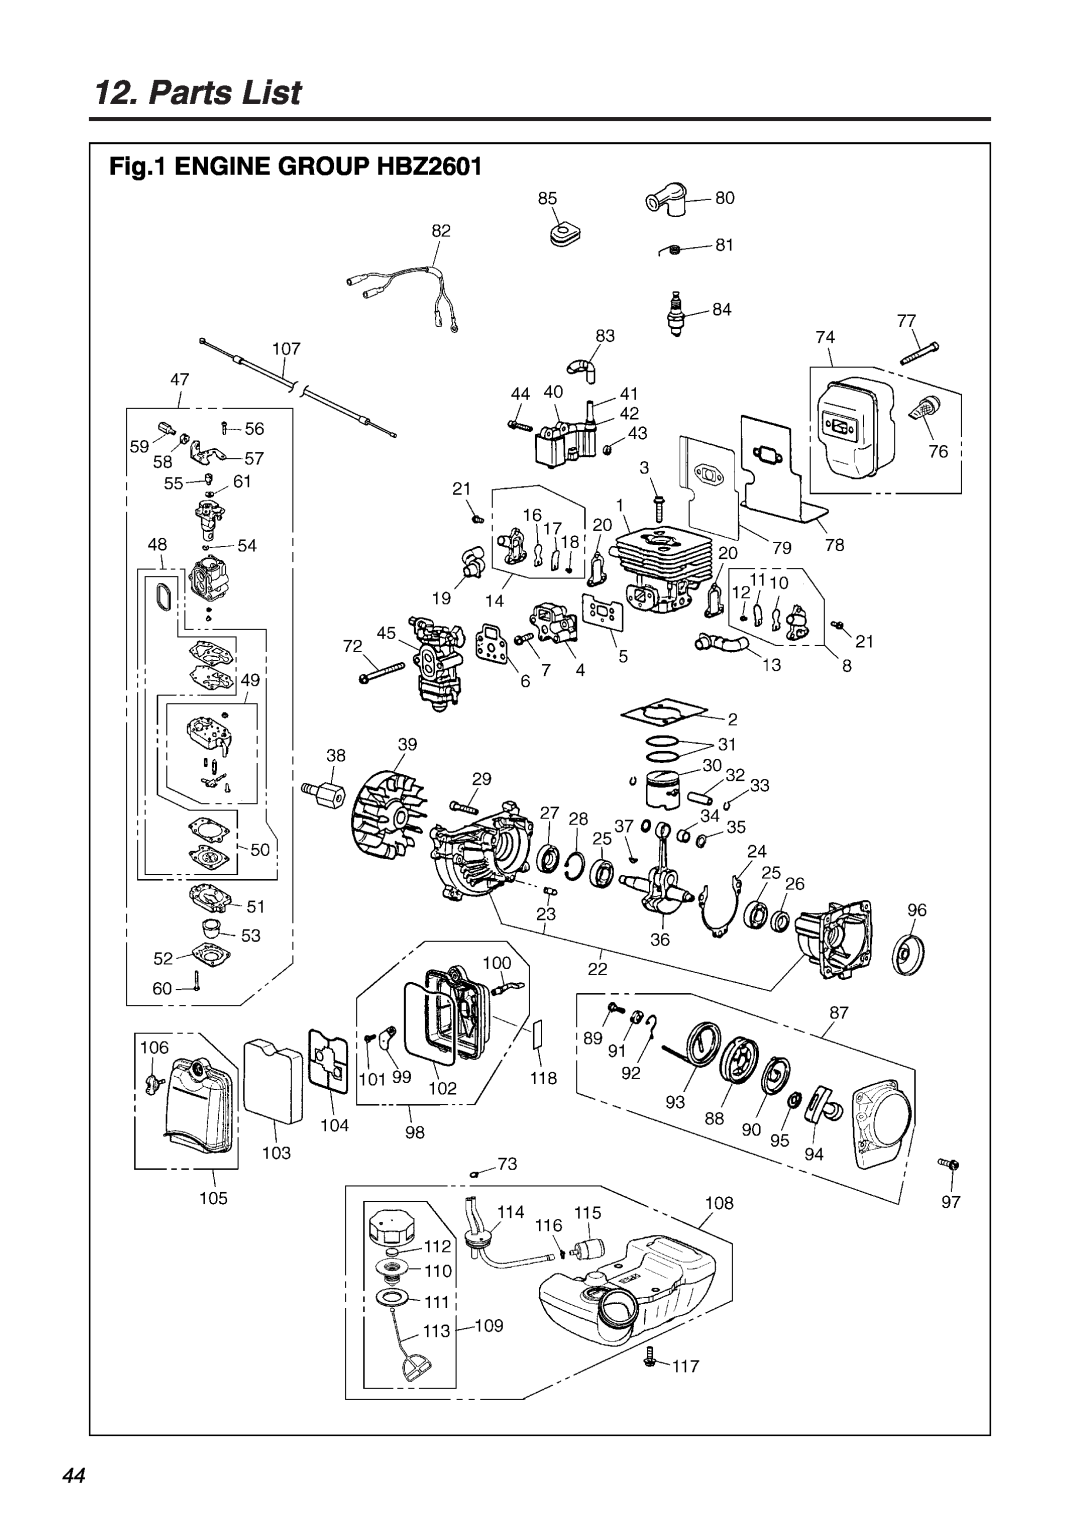 RedMax manual Parts List, ENGINE GROUP HBZ2601 